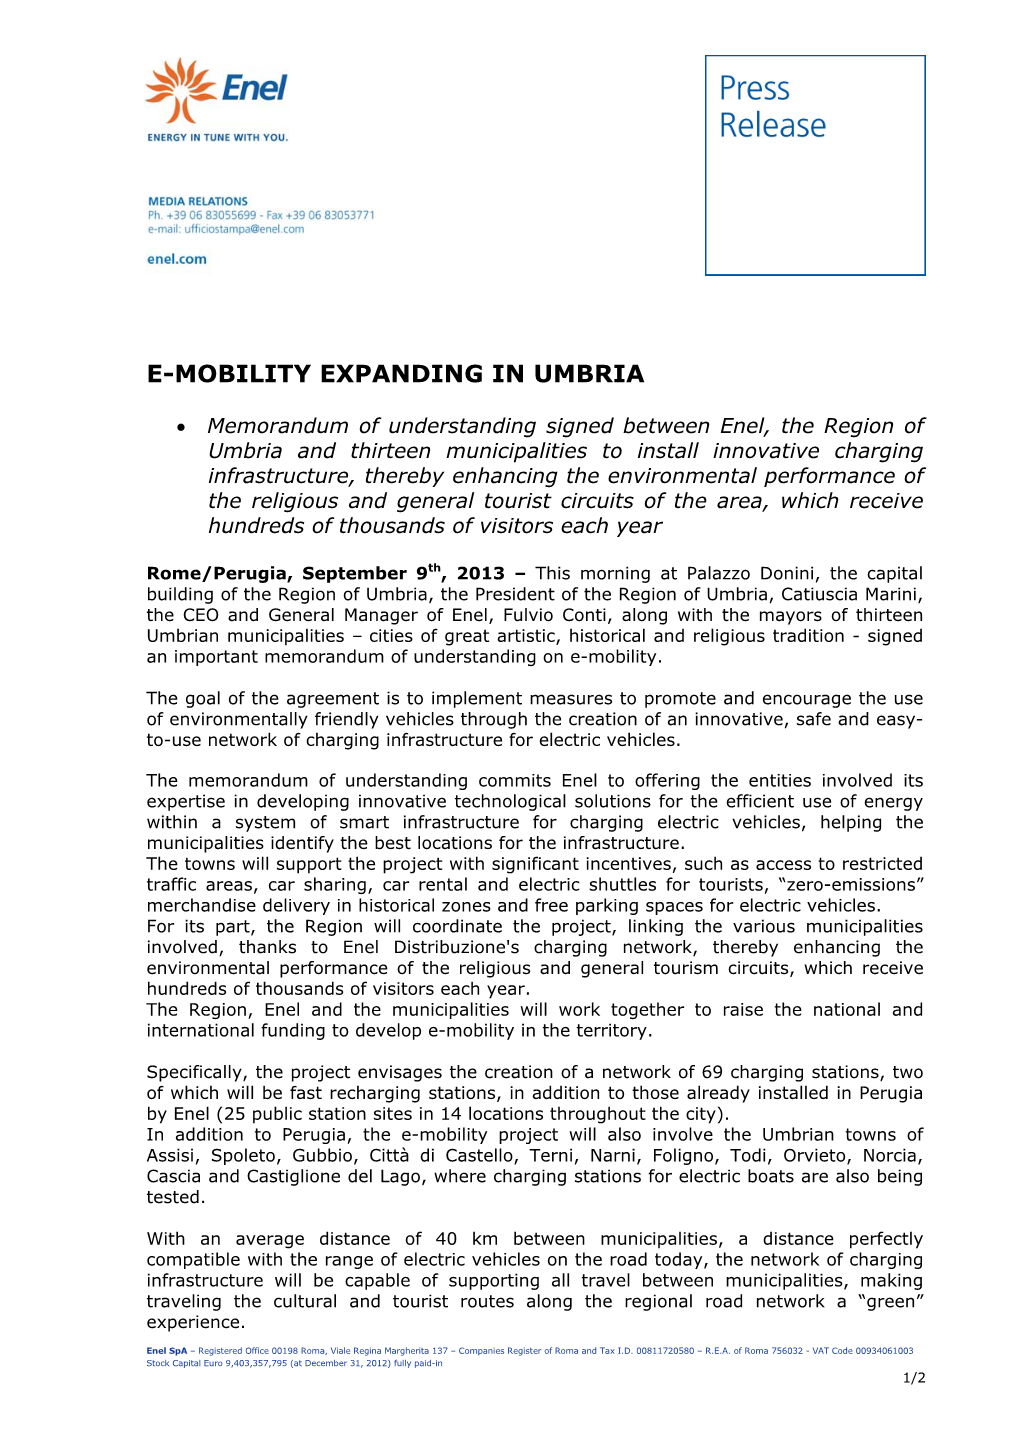 E-Mobility Expanding in Umbria